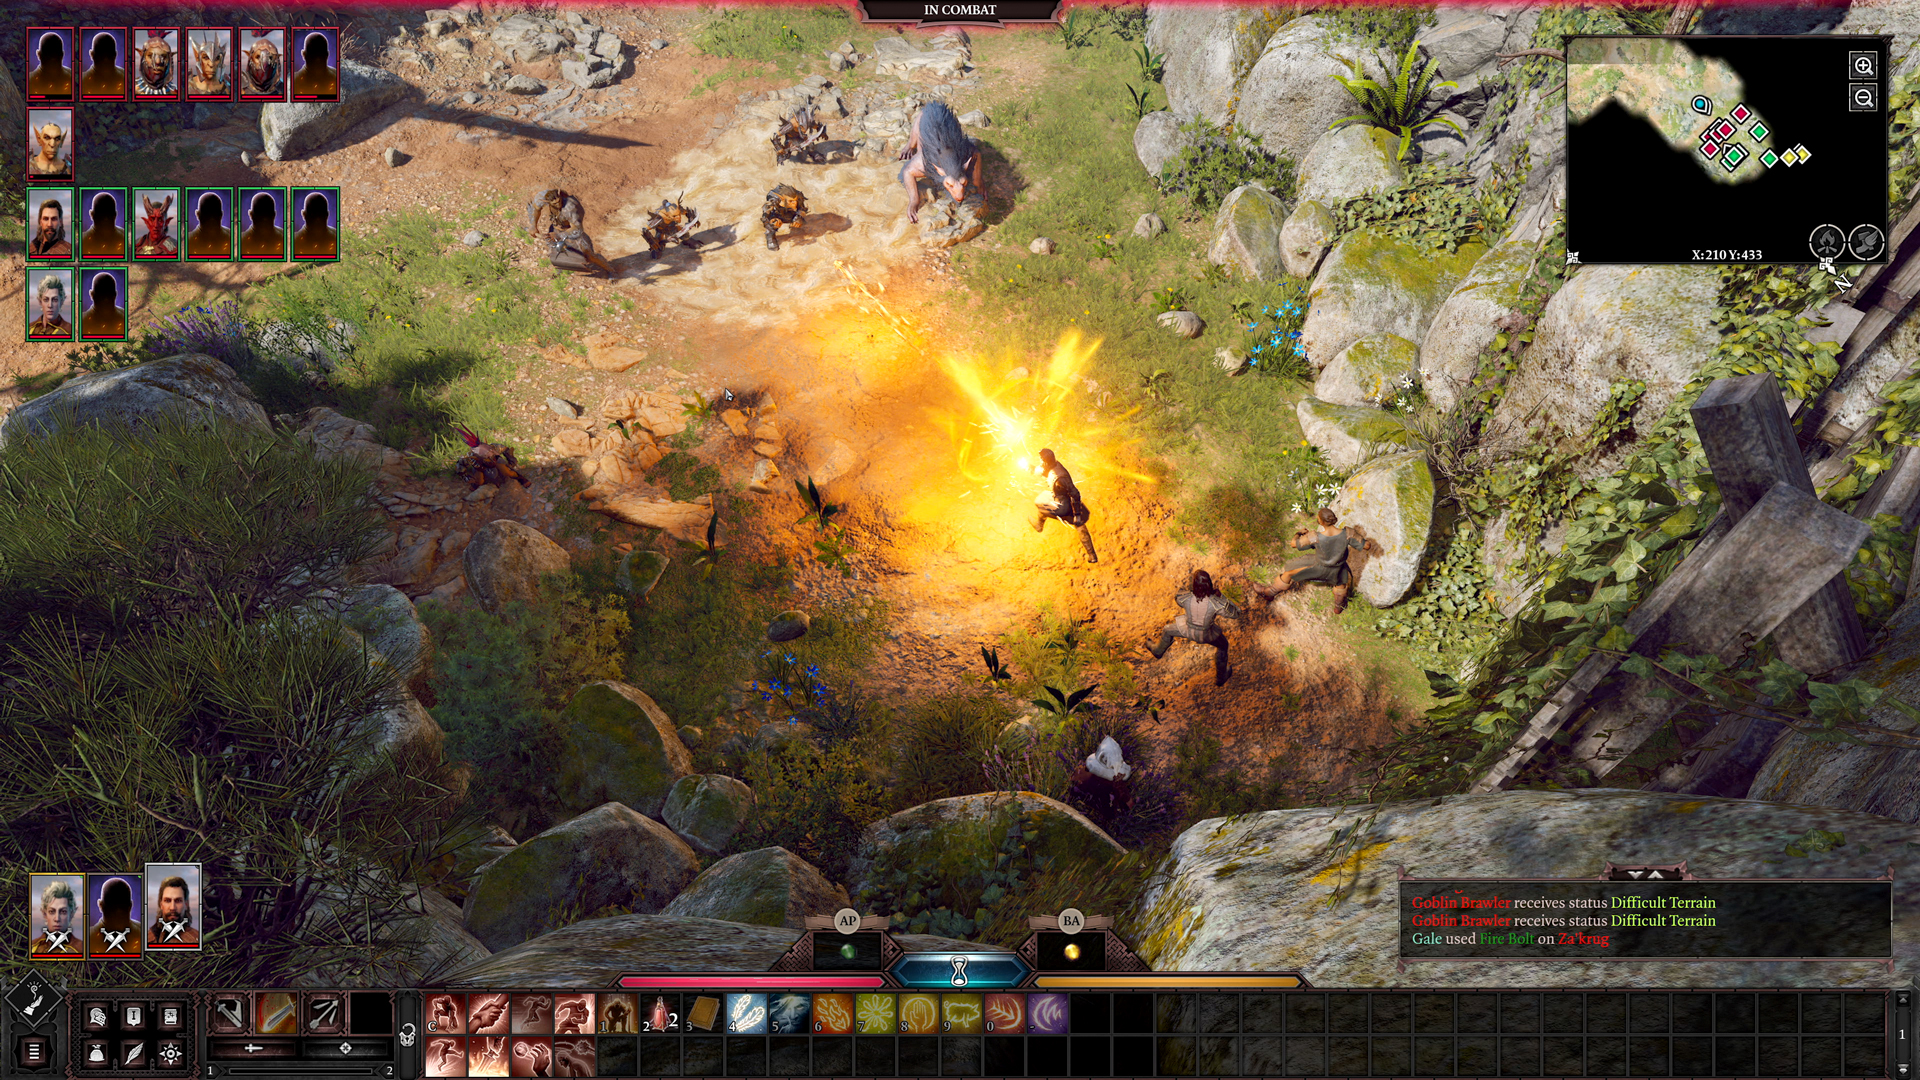 Baldur's Gate 3 gameplay reveal gives us our best look at Larian Studios'  sequel | GamesRadar+